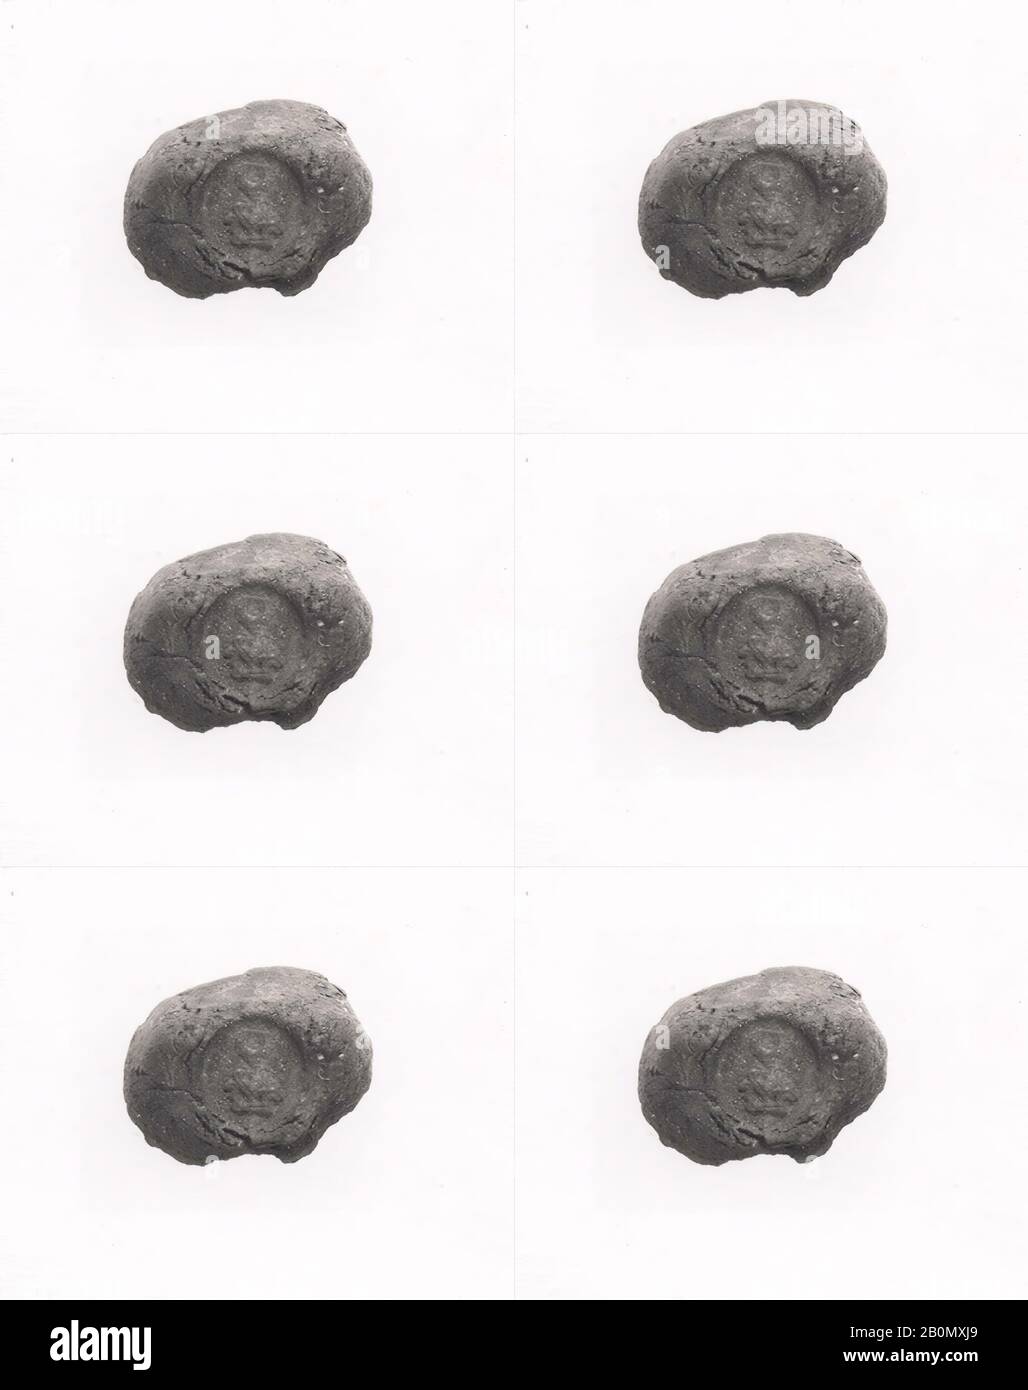 Sealing, Sasanian, Sasanian, Data Ca. 7th secolo d.C., Iran, Qasr-i Abu Nasr, Sasanian, argilla cotta All'Onu, 0,43 poll. (1,09 cm), guarnizioni a tenuta stagna Foto Stock